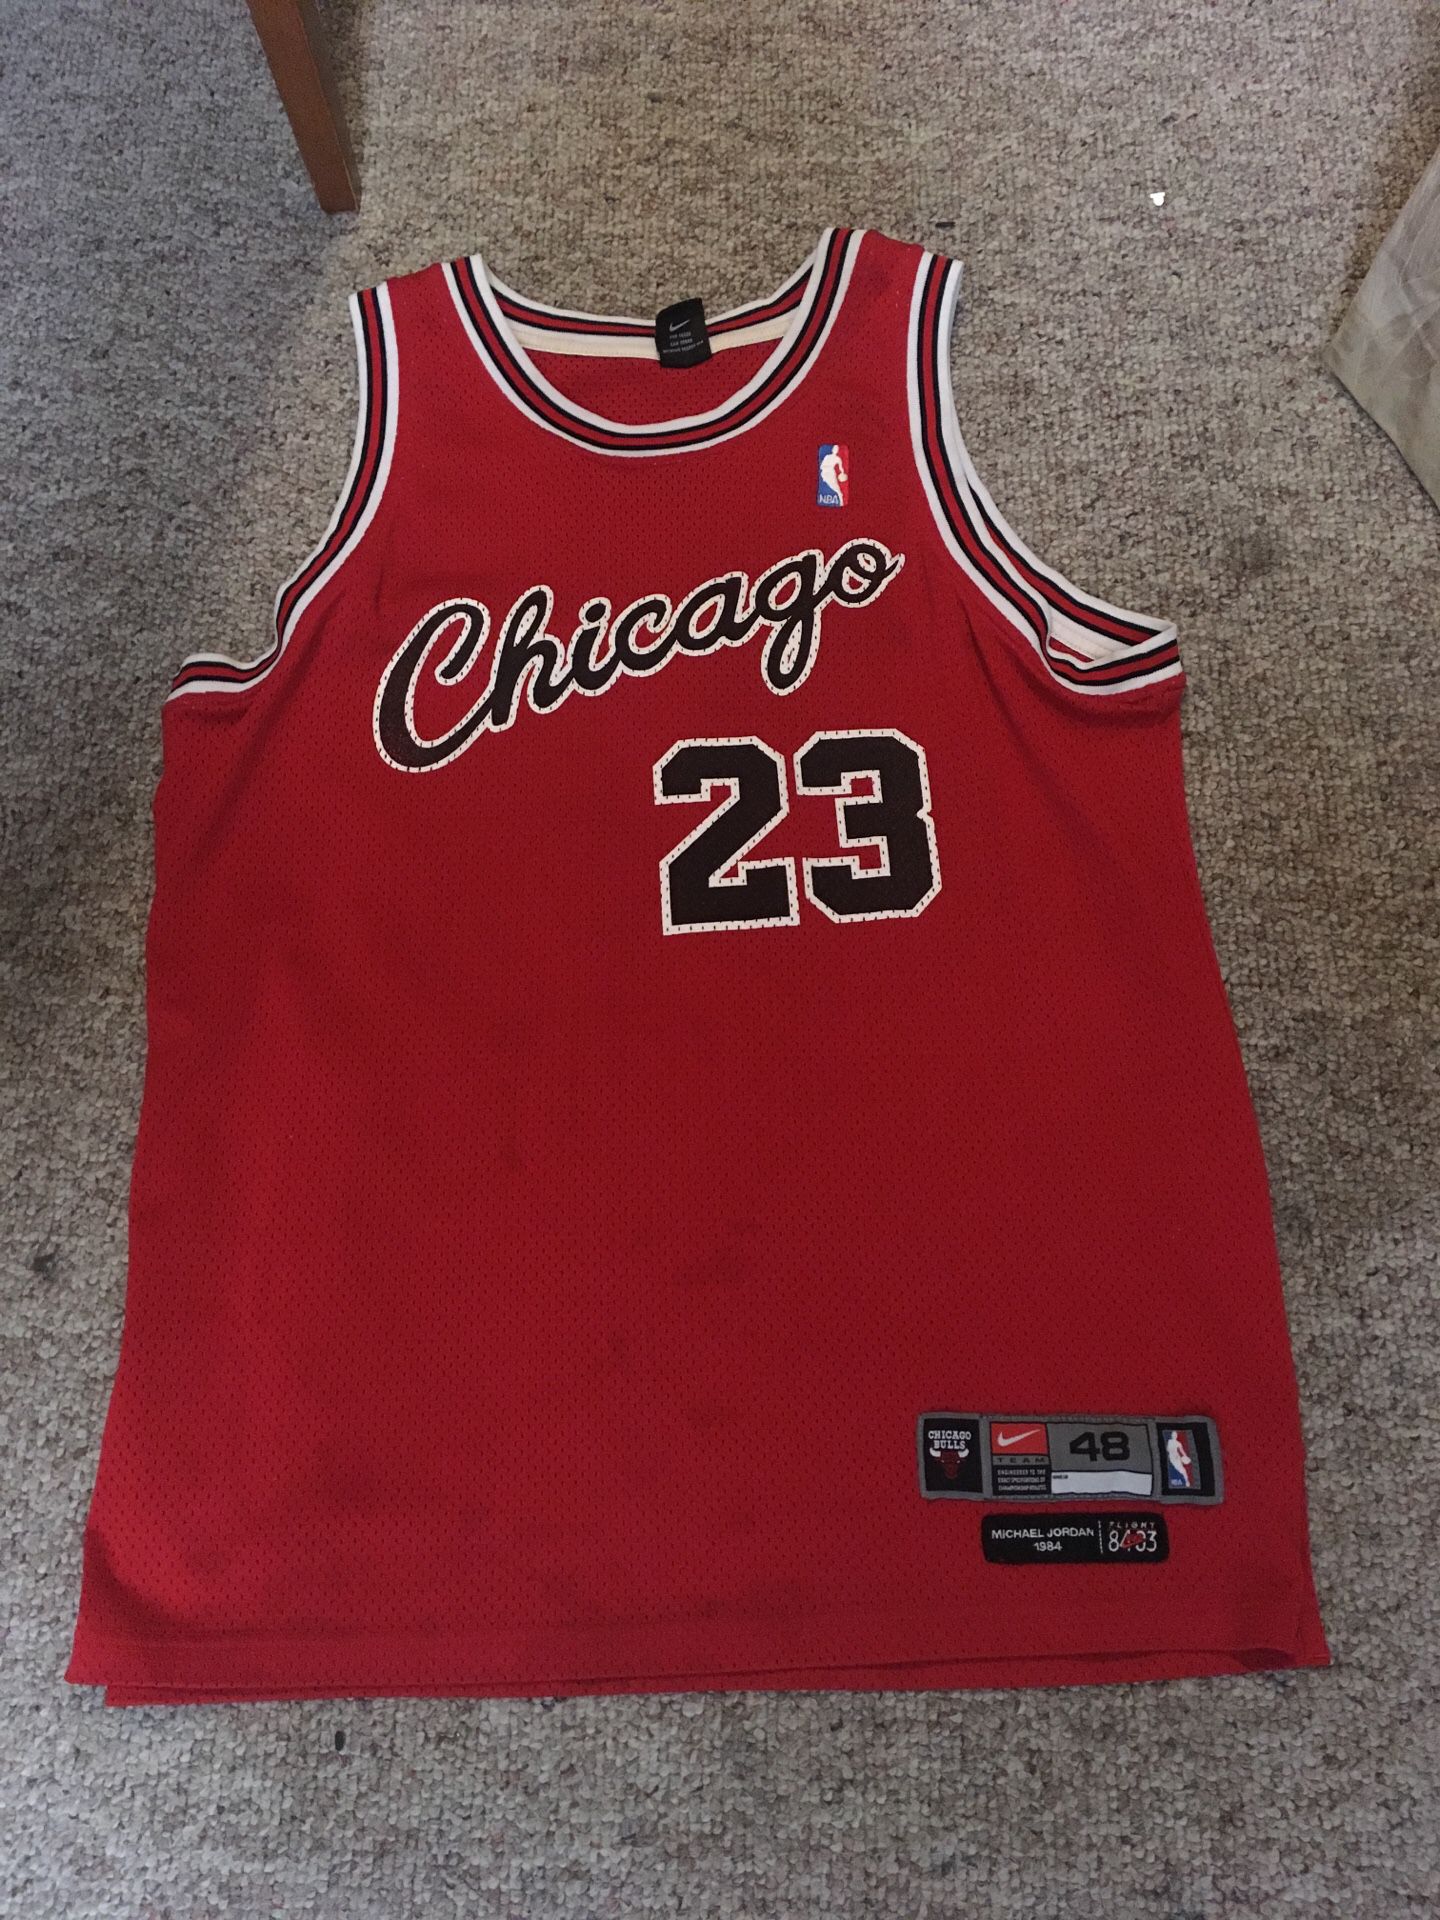 Michael Jordan Bulls jersey Authentic